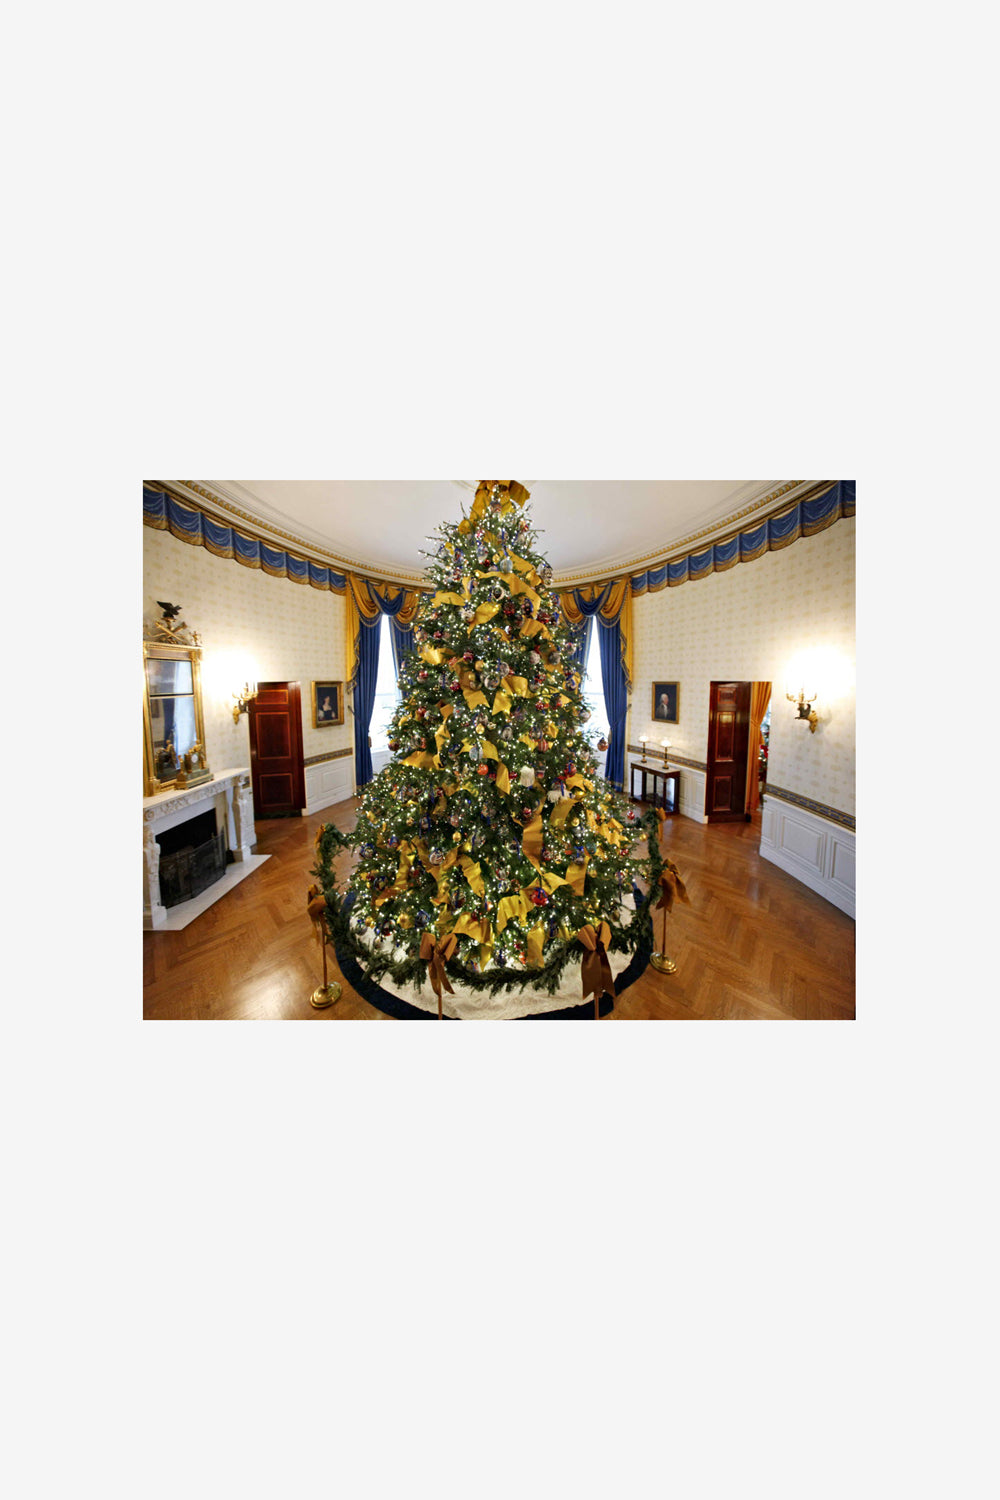 White House Christmas, 2009